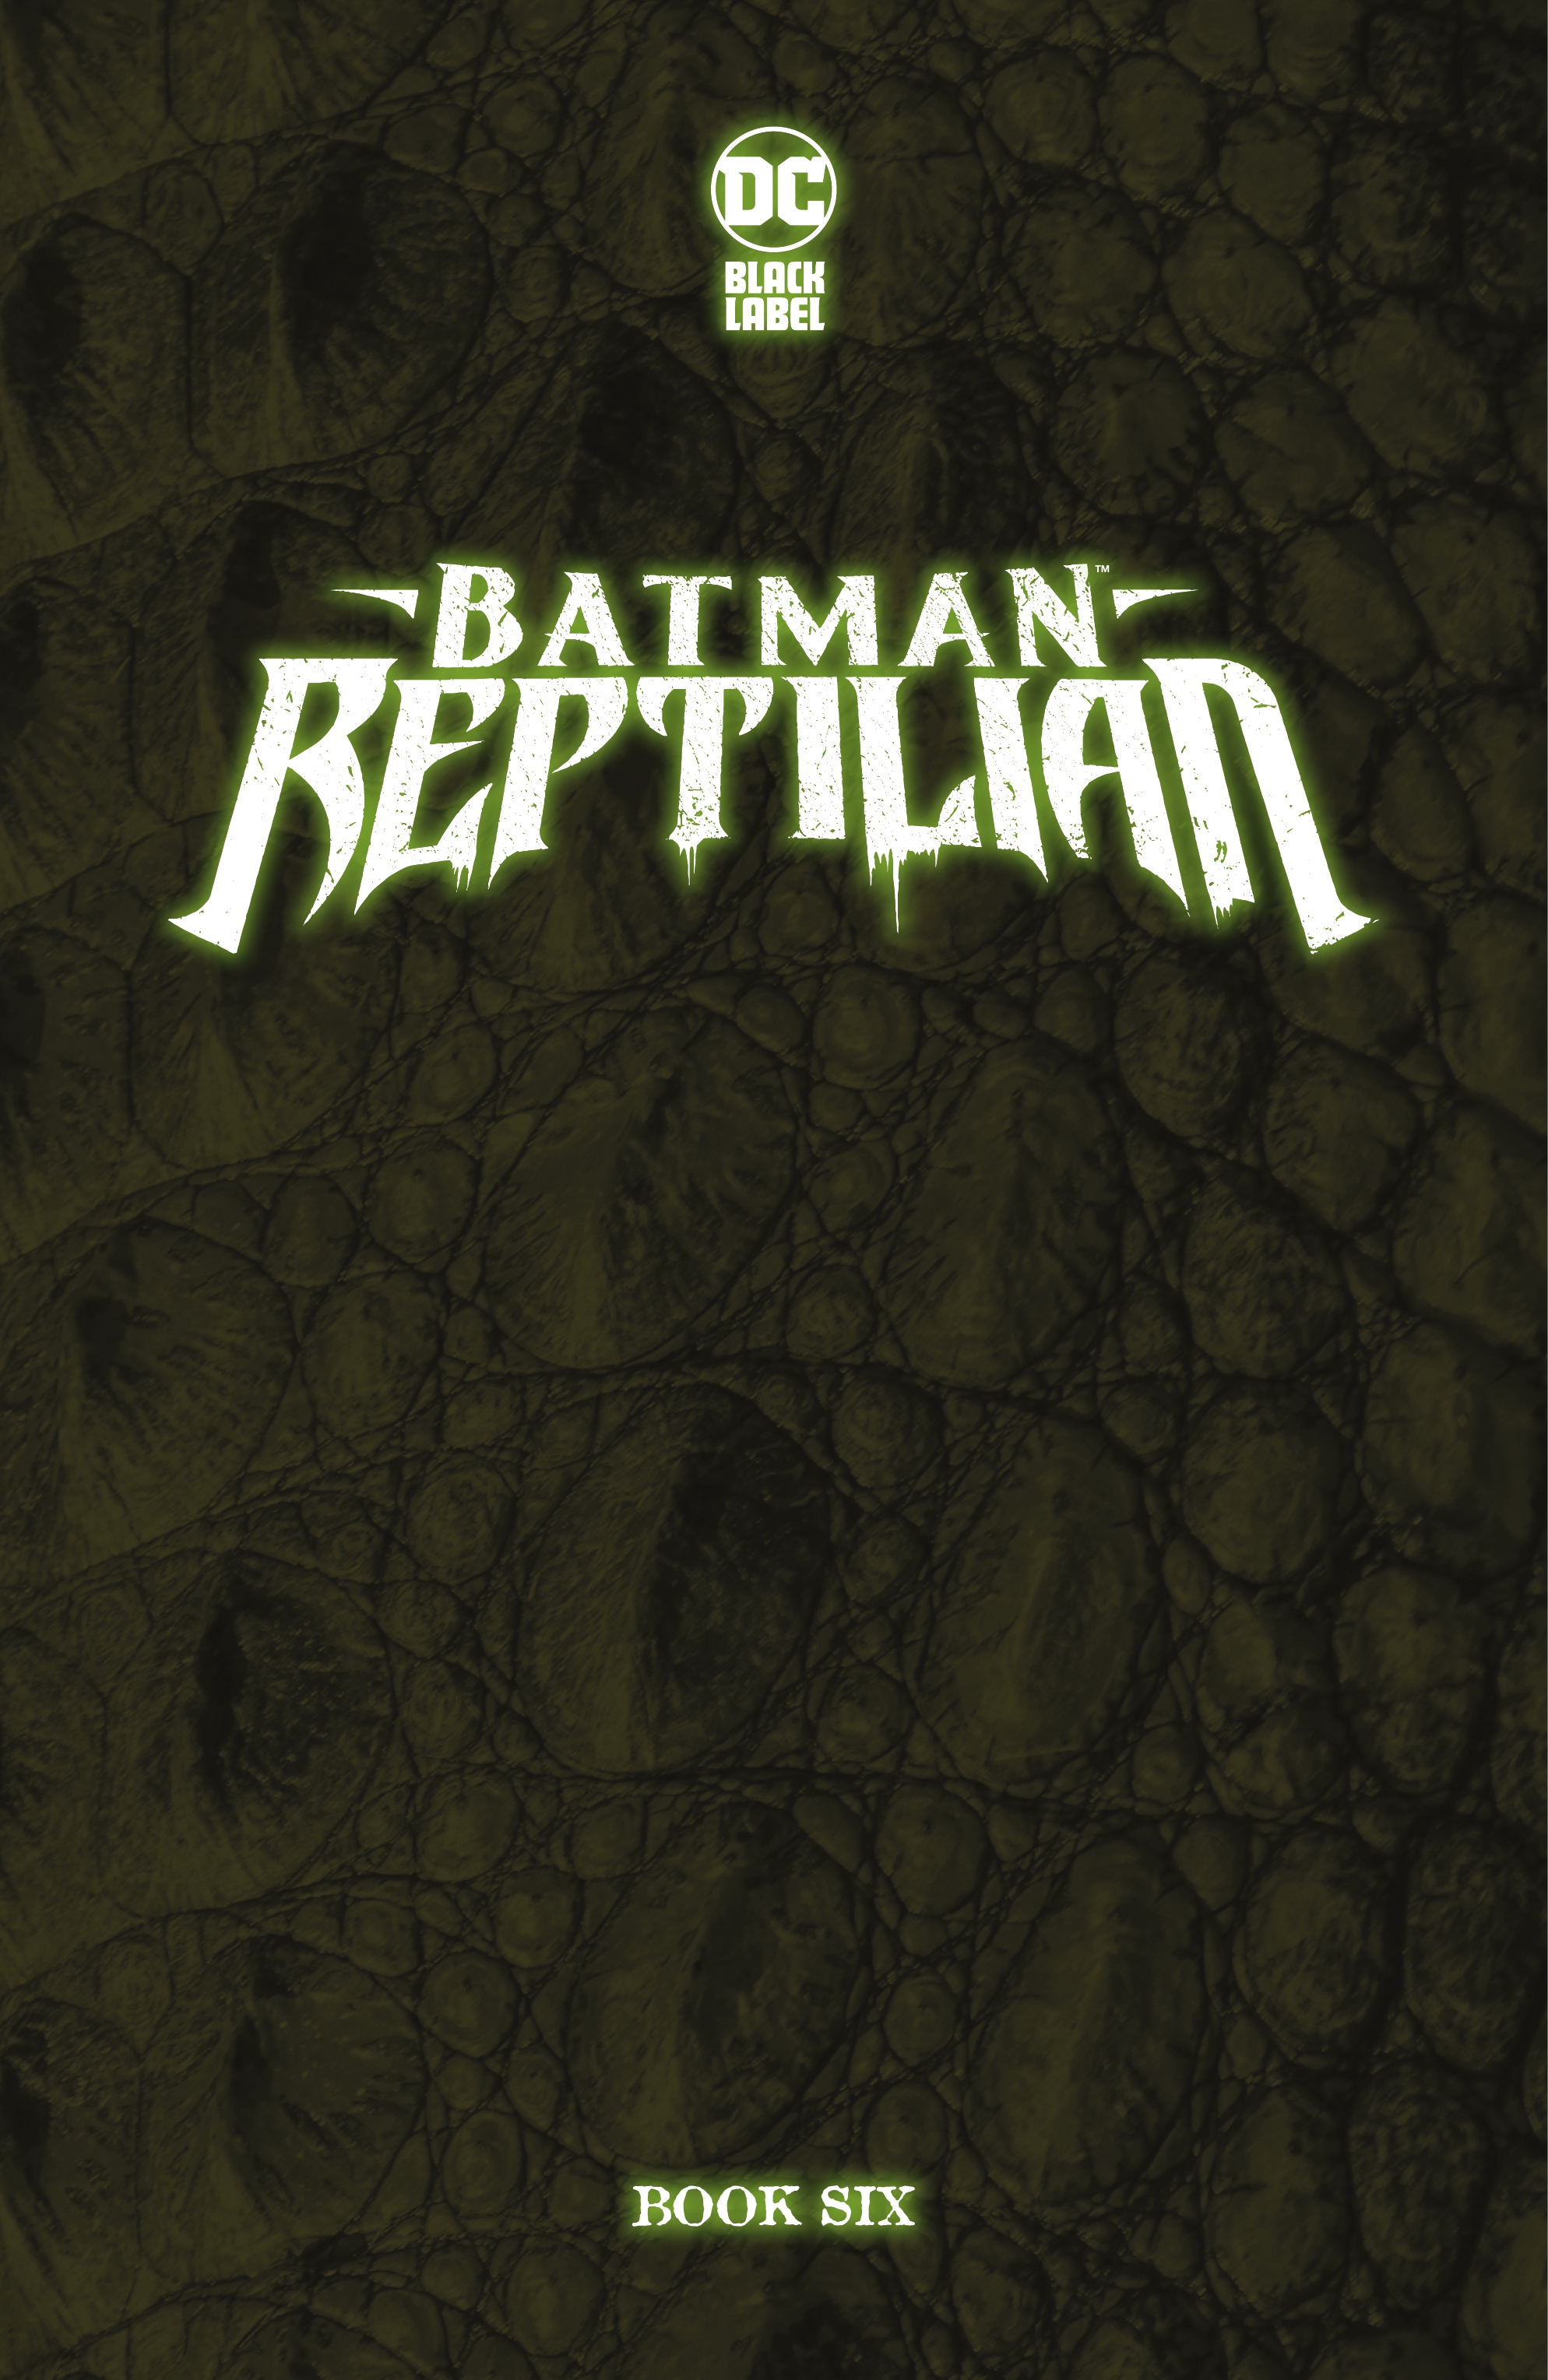 Read online Batman: Reptilian comic -  Issue #6 - 2